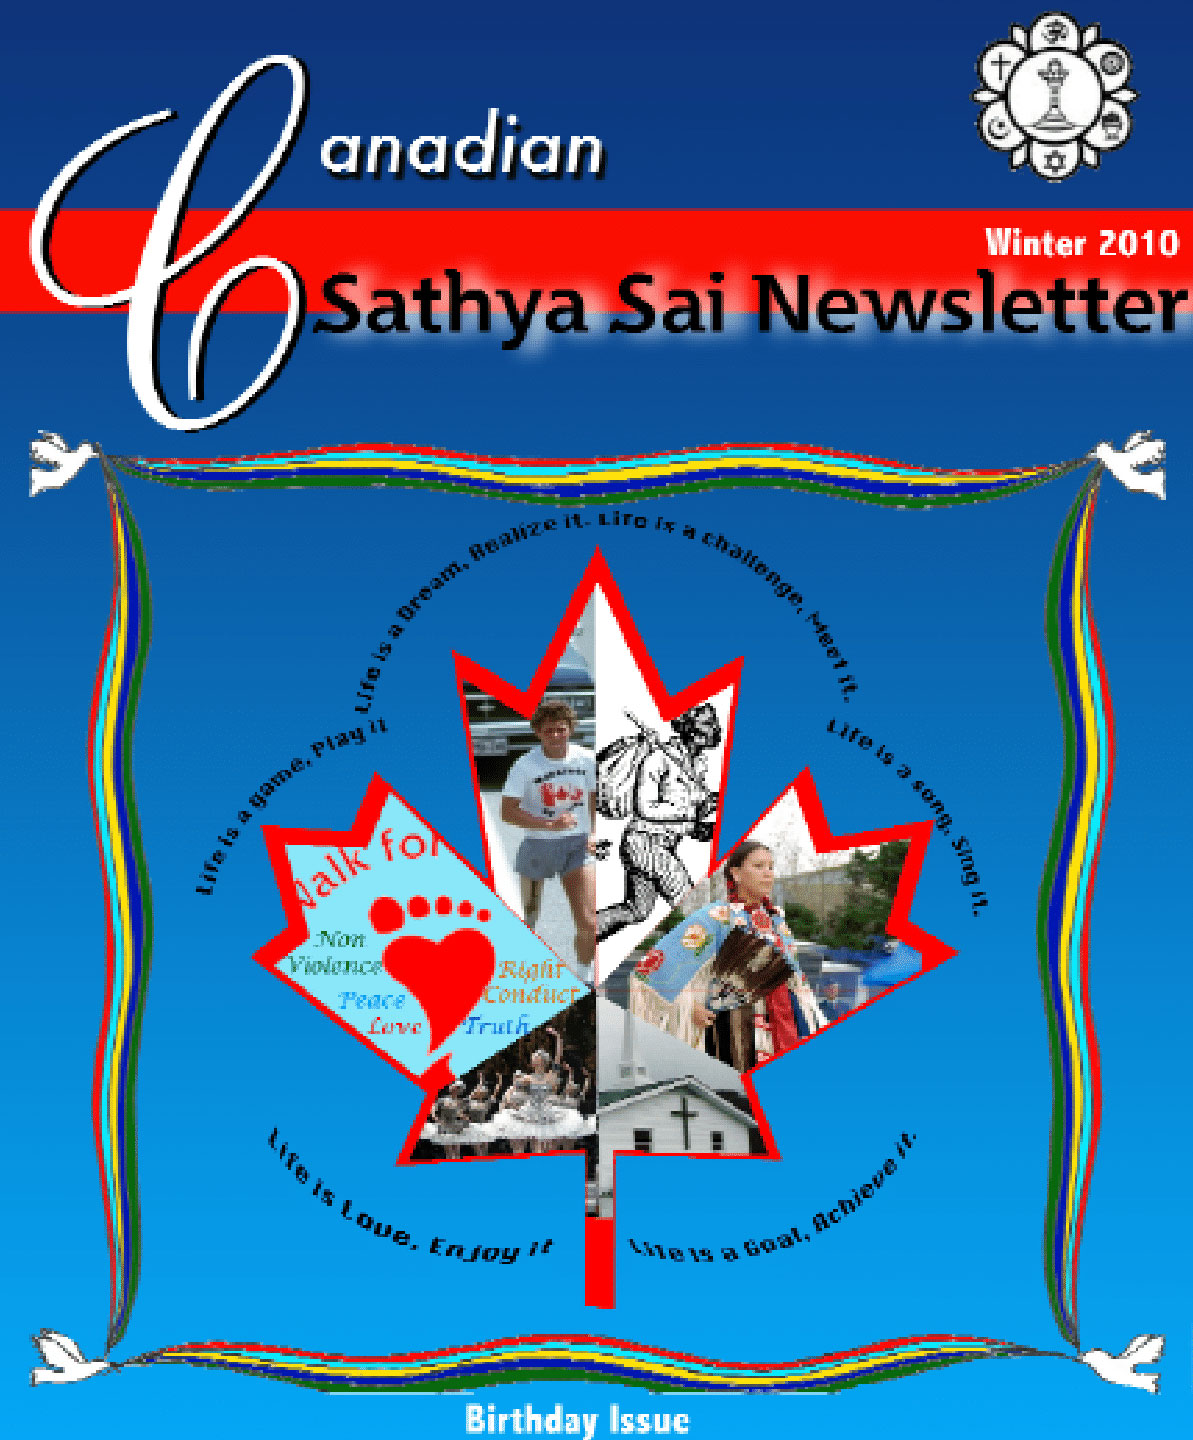 The Canadian Sathya Sai Magazine - Winter 2010